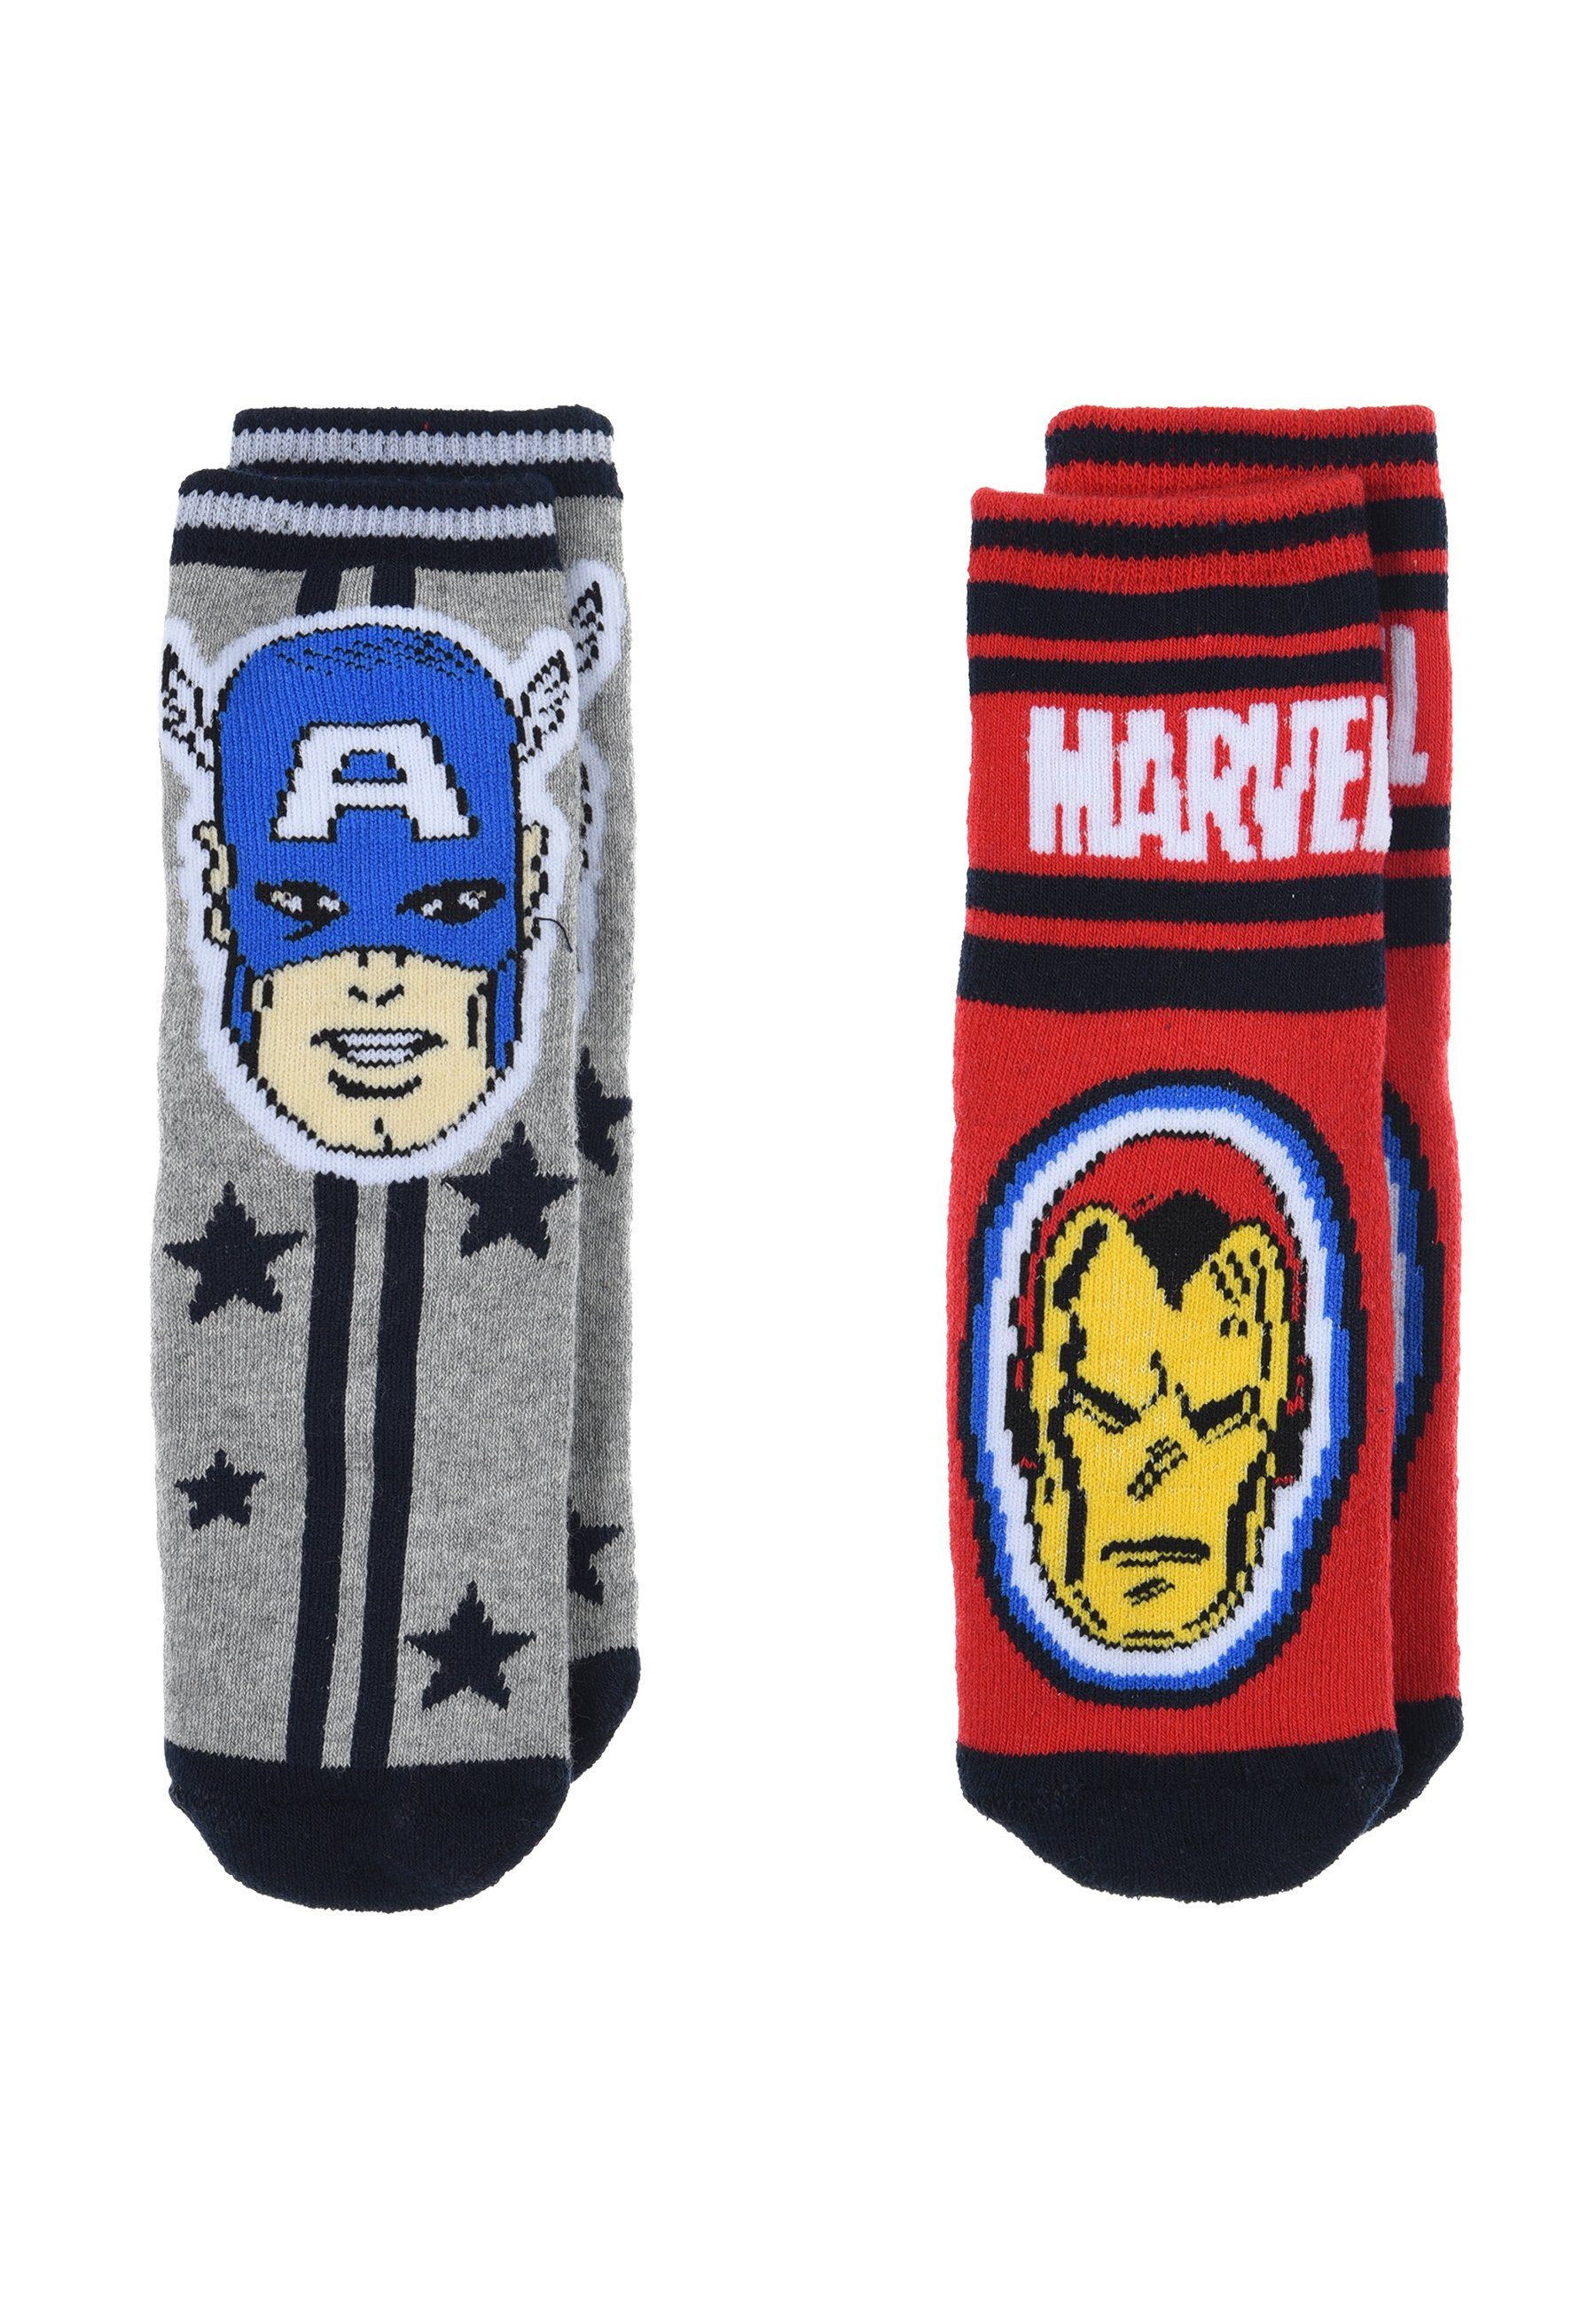 The AVENGERS ABS-Socken Captain America und Ironman Kinder Jungen Socken 2  Paar Gumminoppen Stopper-Socken Strümpfe (2-Paar) mit anti-rutsch Noppen,  Socken Set von Avengers mit zwei verschiedenen Motiven